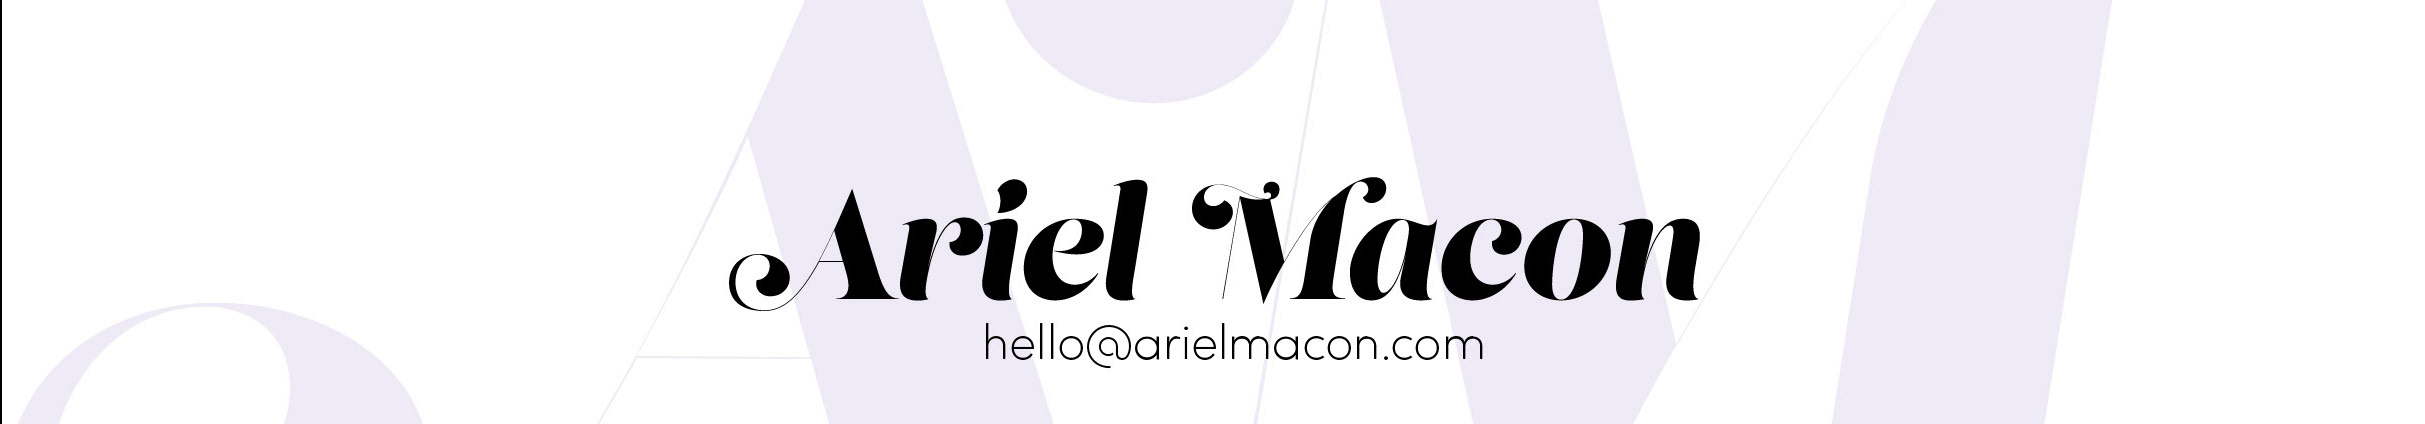 Ariel Macon's profile banner